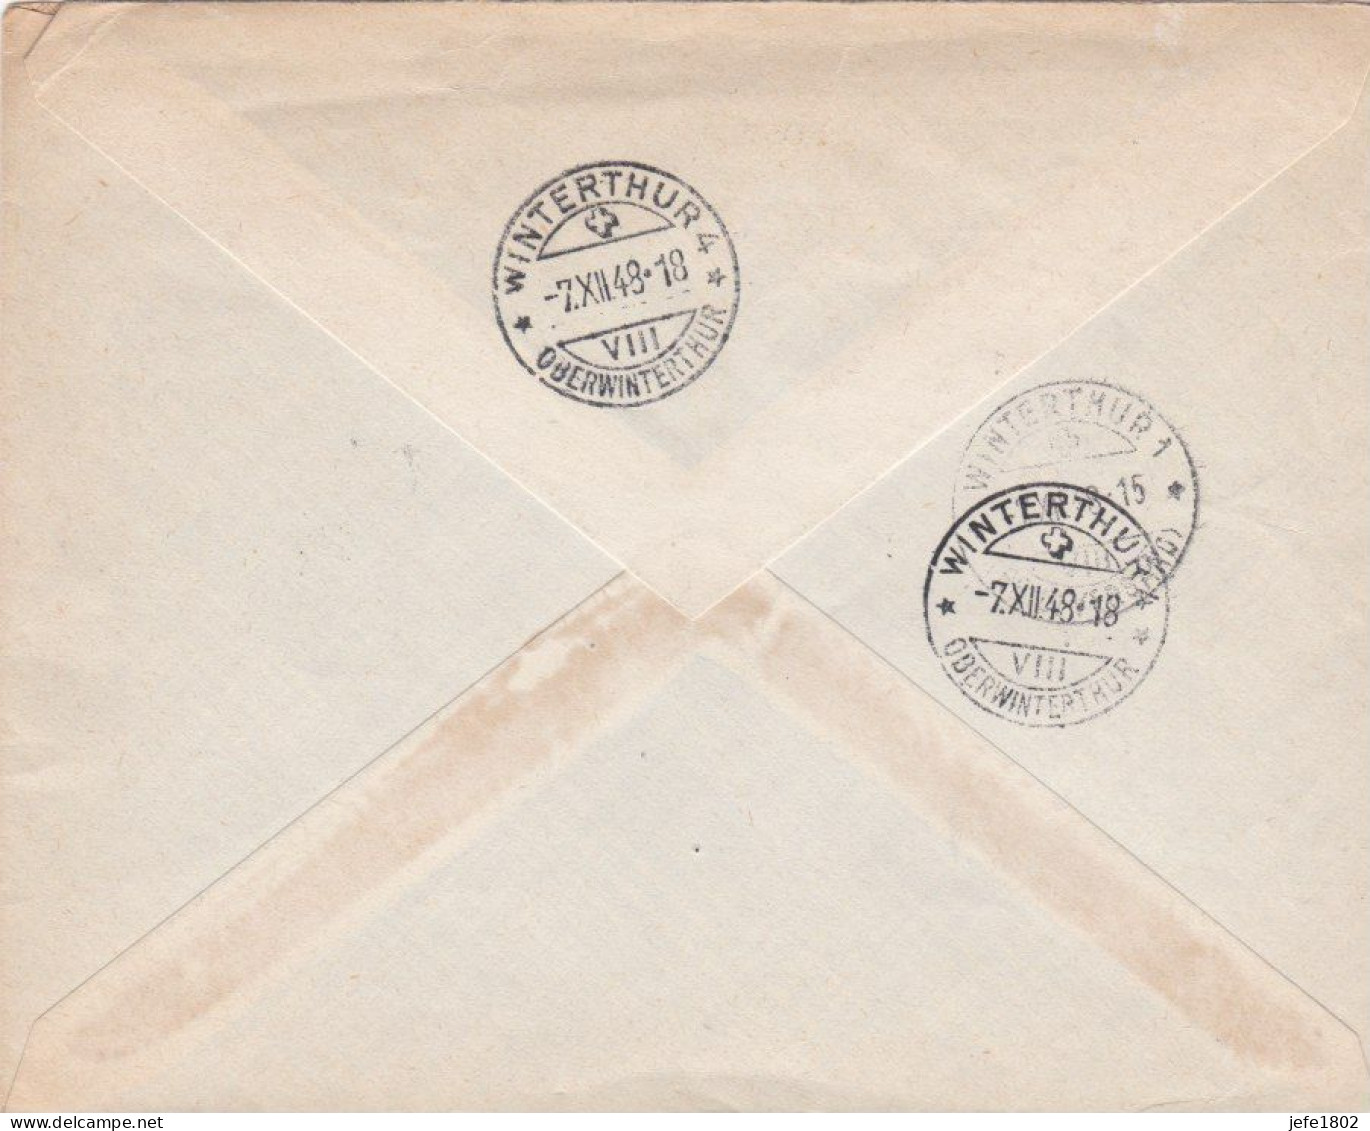 HEKLA 1947 On Registered Mail From Reykjavik To Winterthur - Switzerland (Schweiz) - Storia Postale